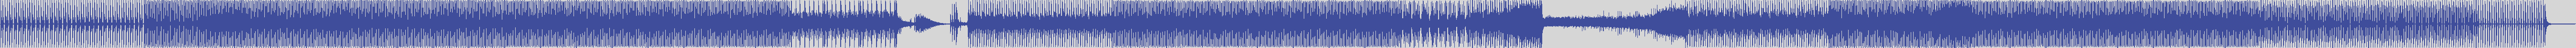 atomic_recordings [AR021] Paolo Driver - Makishi Rmx [Paolo Driver Rmx] audio wave form